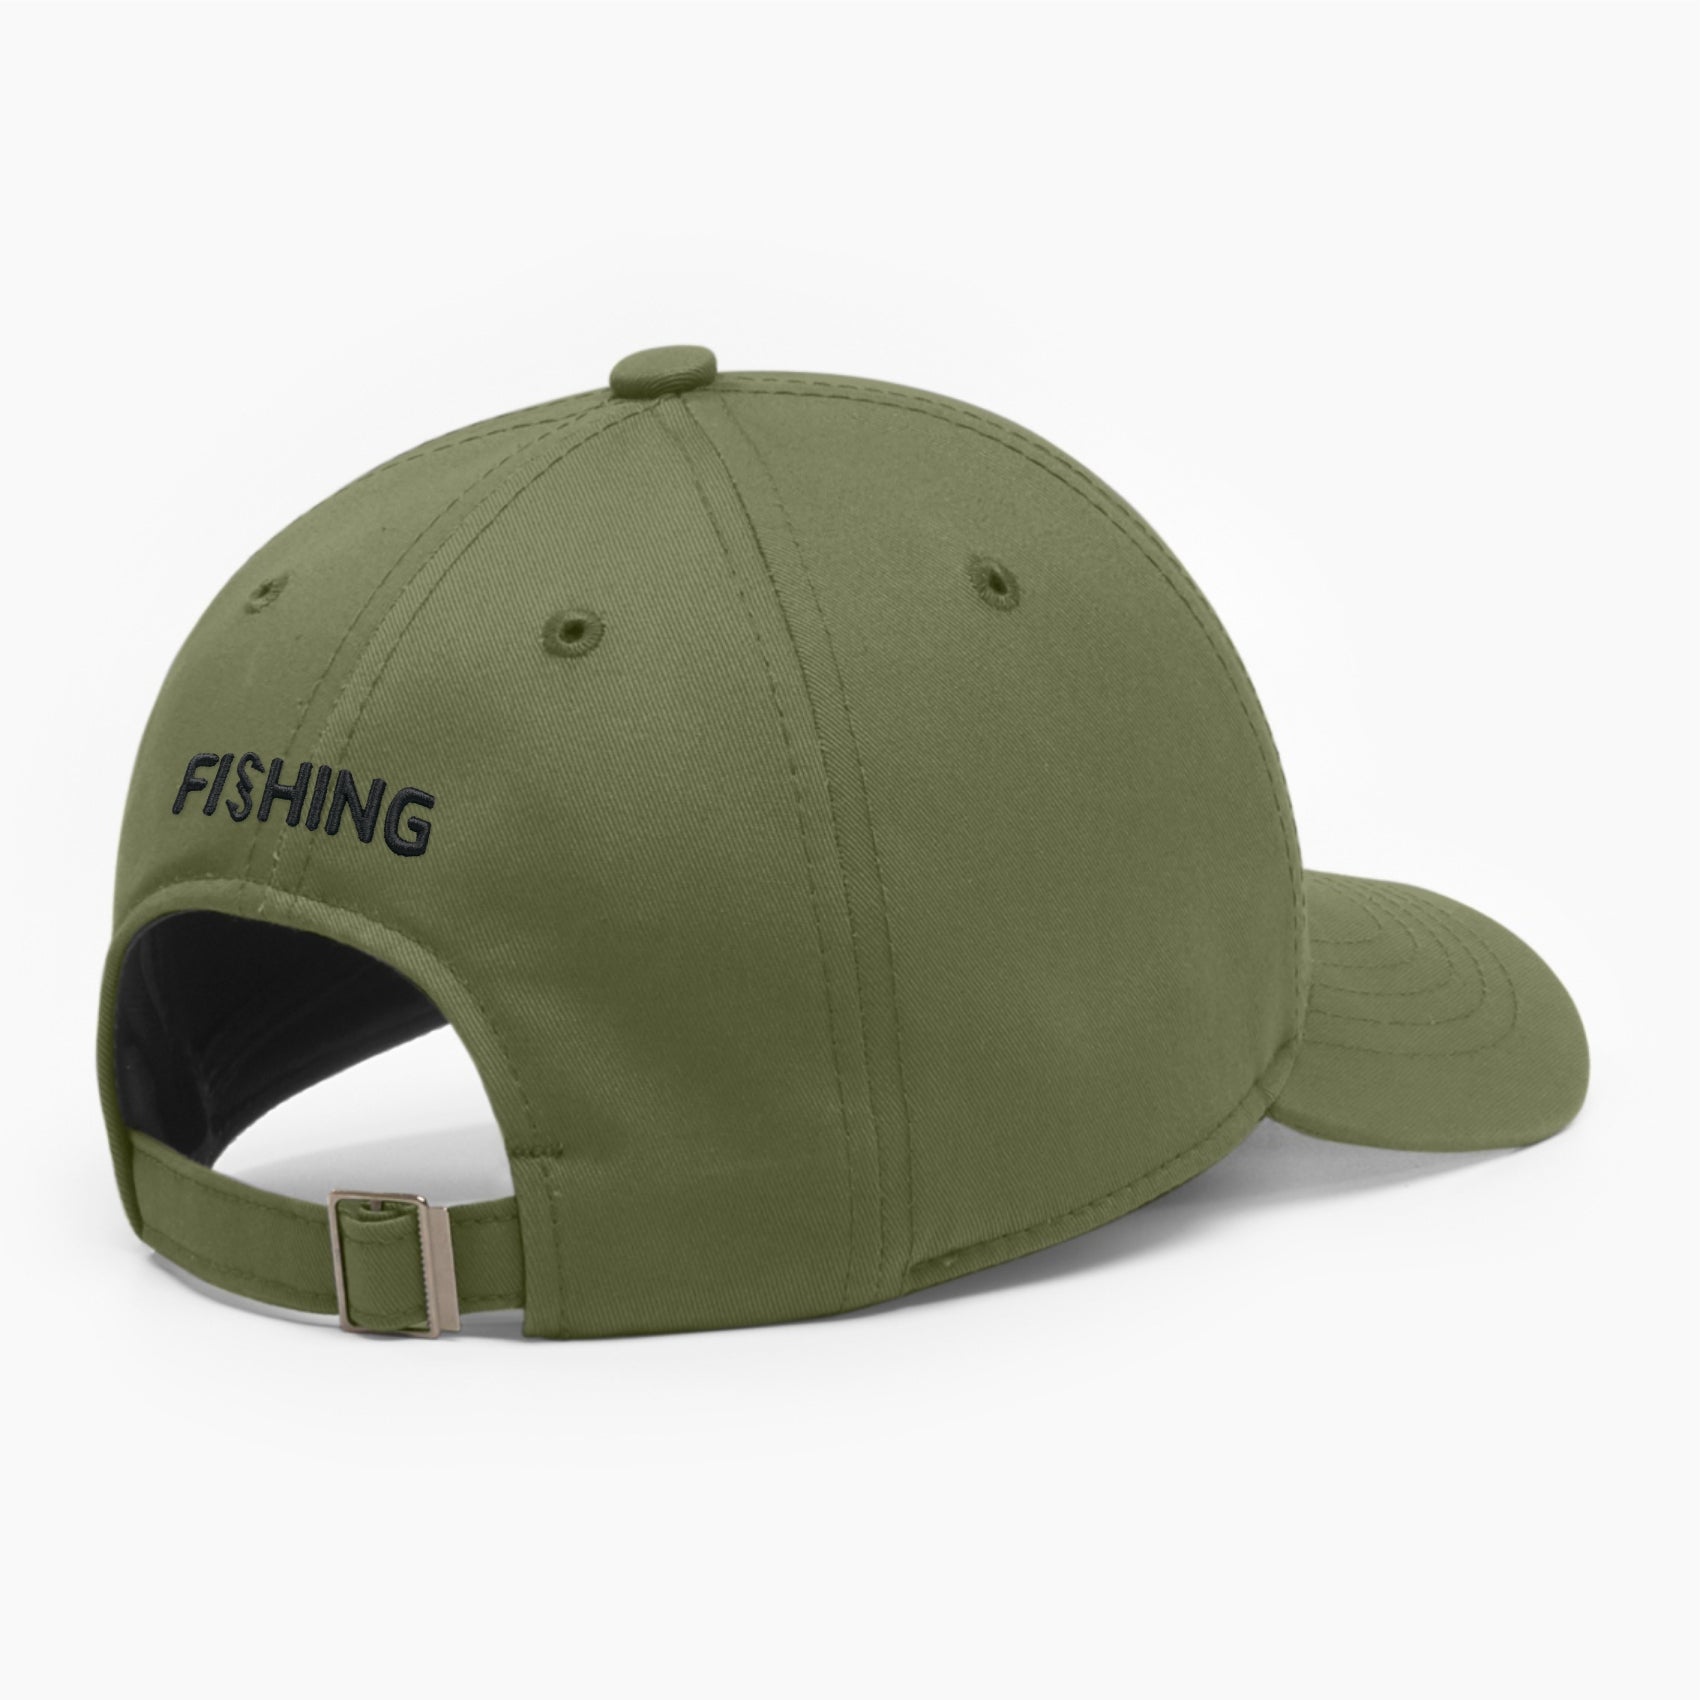 Fishing baseball hat